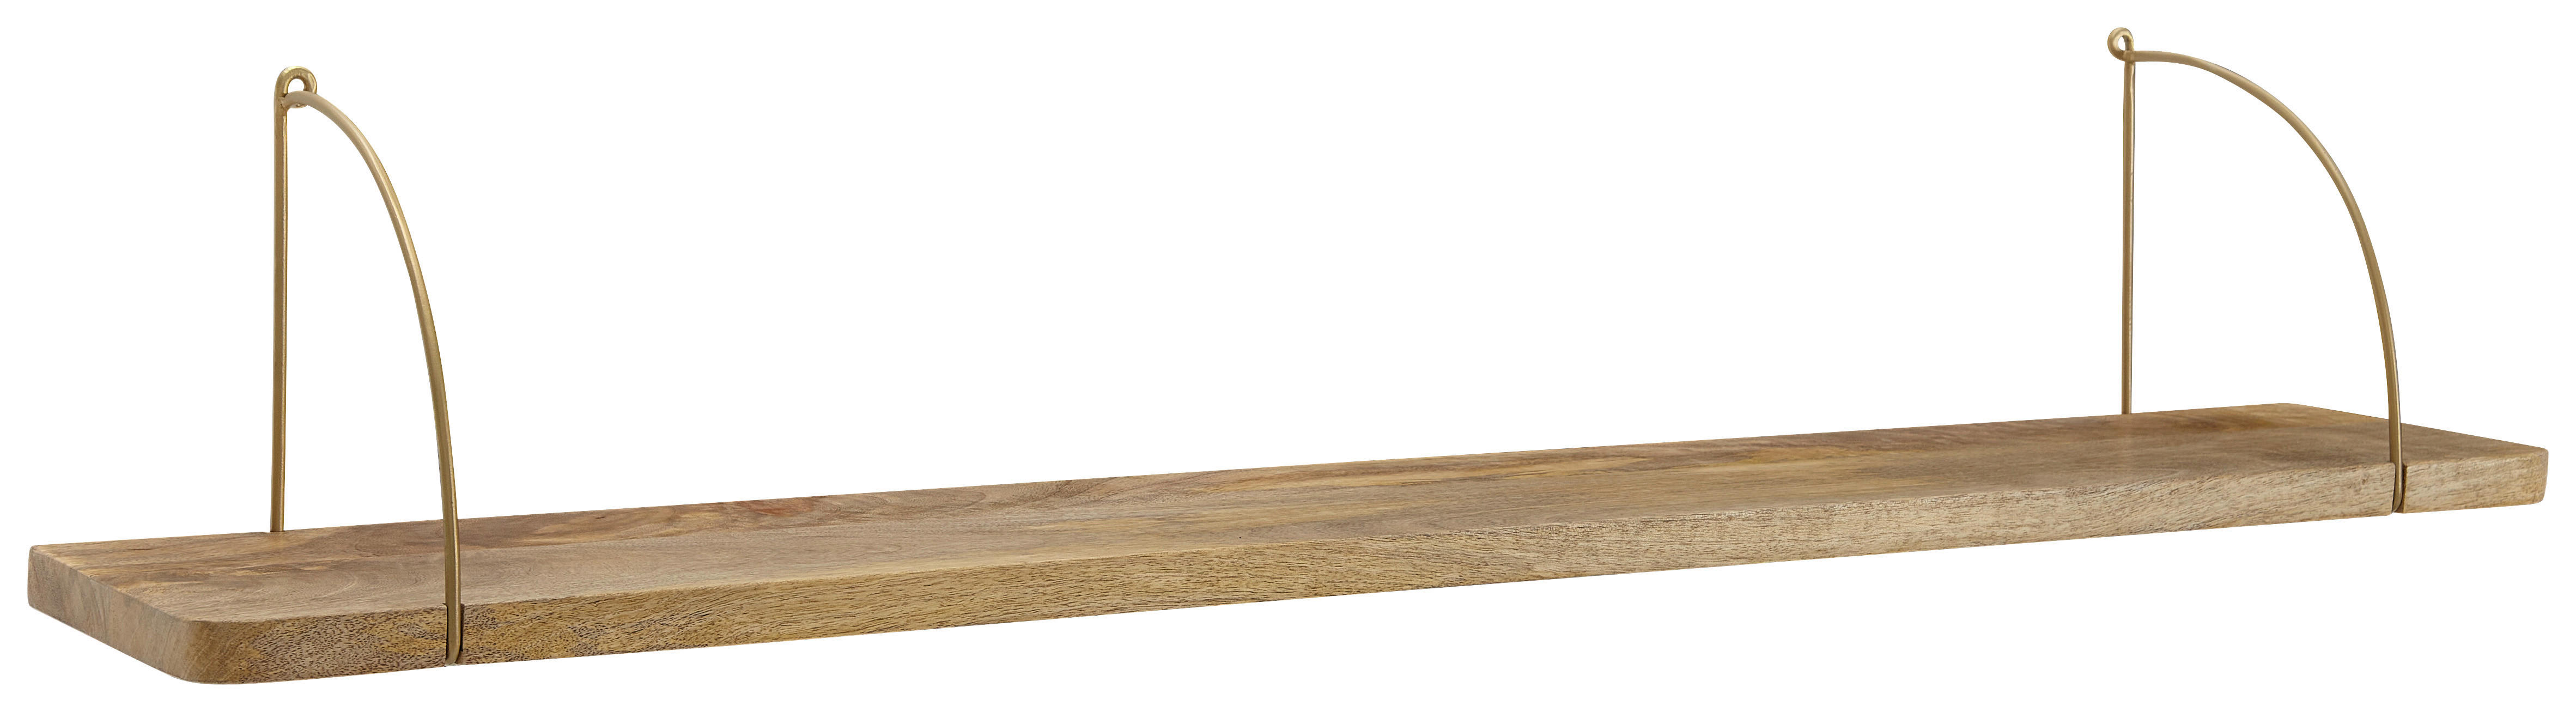 WANDREGAL Mangoholz massiv Braun  - Braun, Basics, Holz (120/25/22cm) - MID.YOU